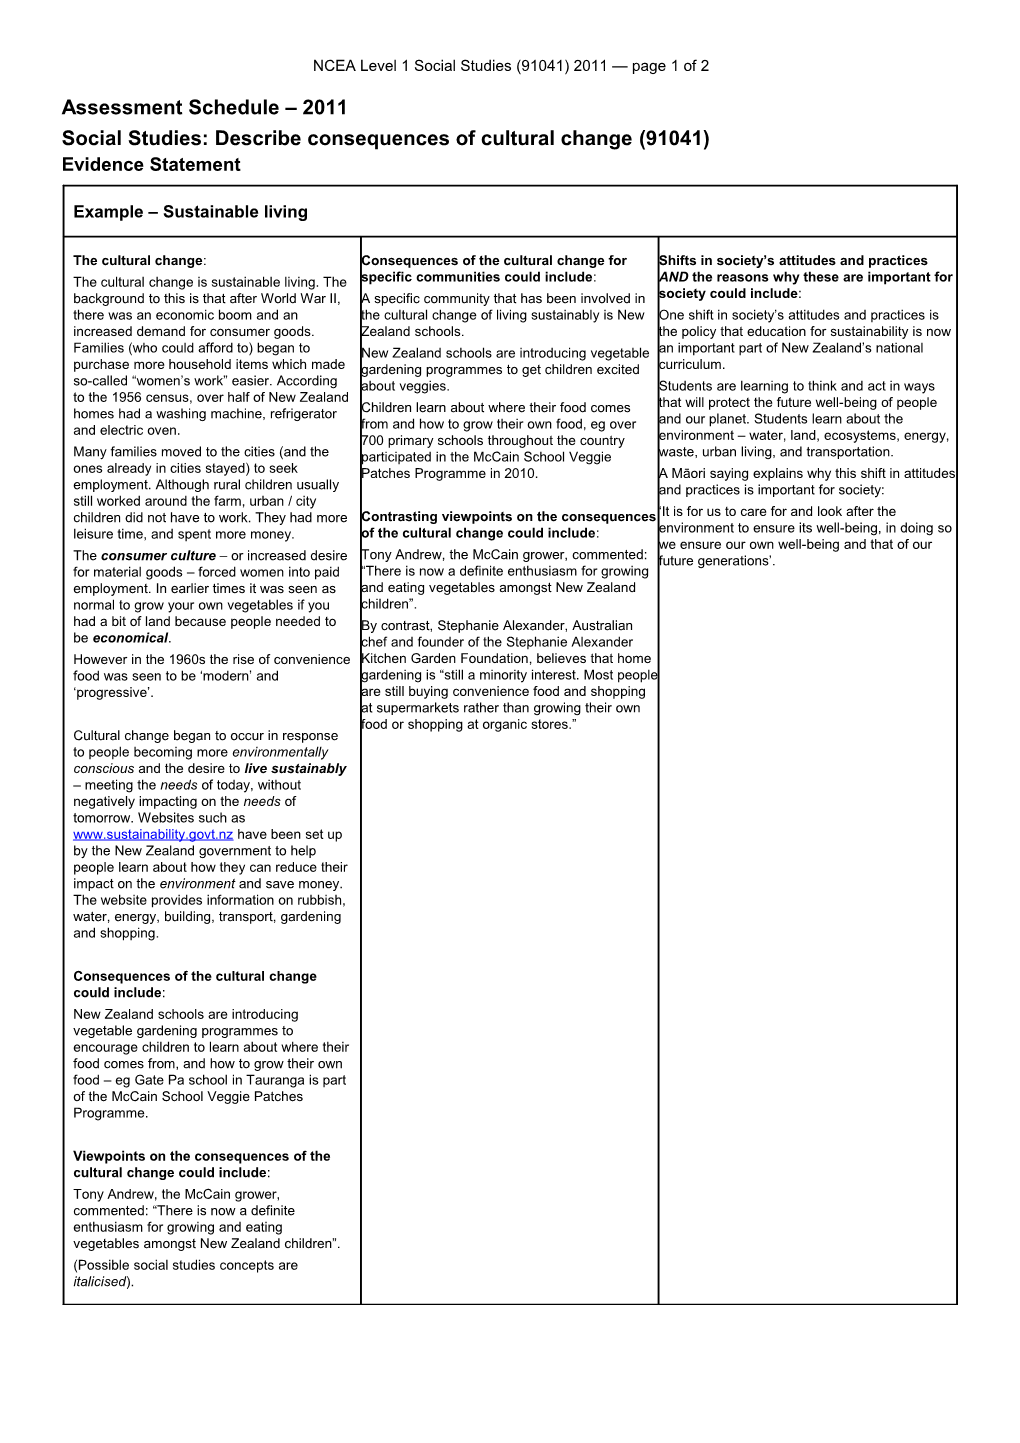 Level 1 Social Studies (91041) 2011 Assessment Schedule